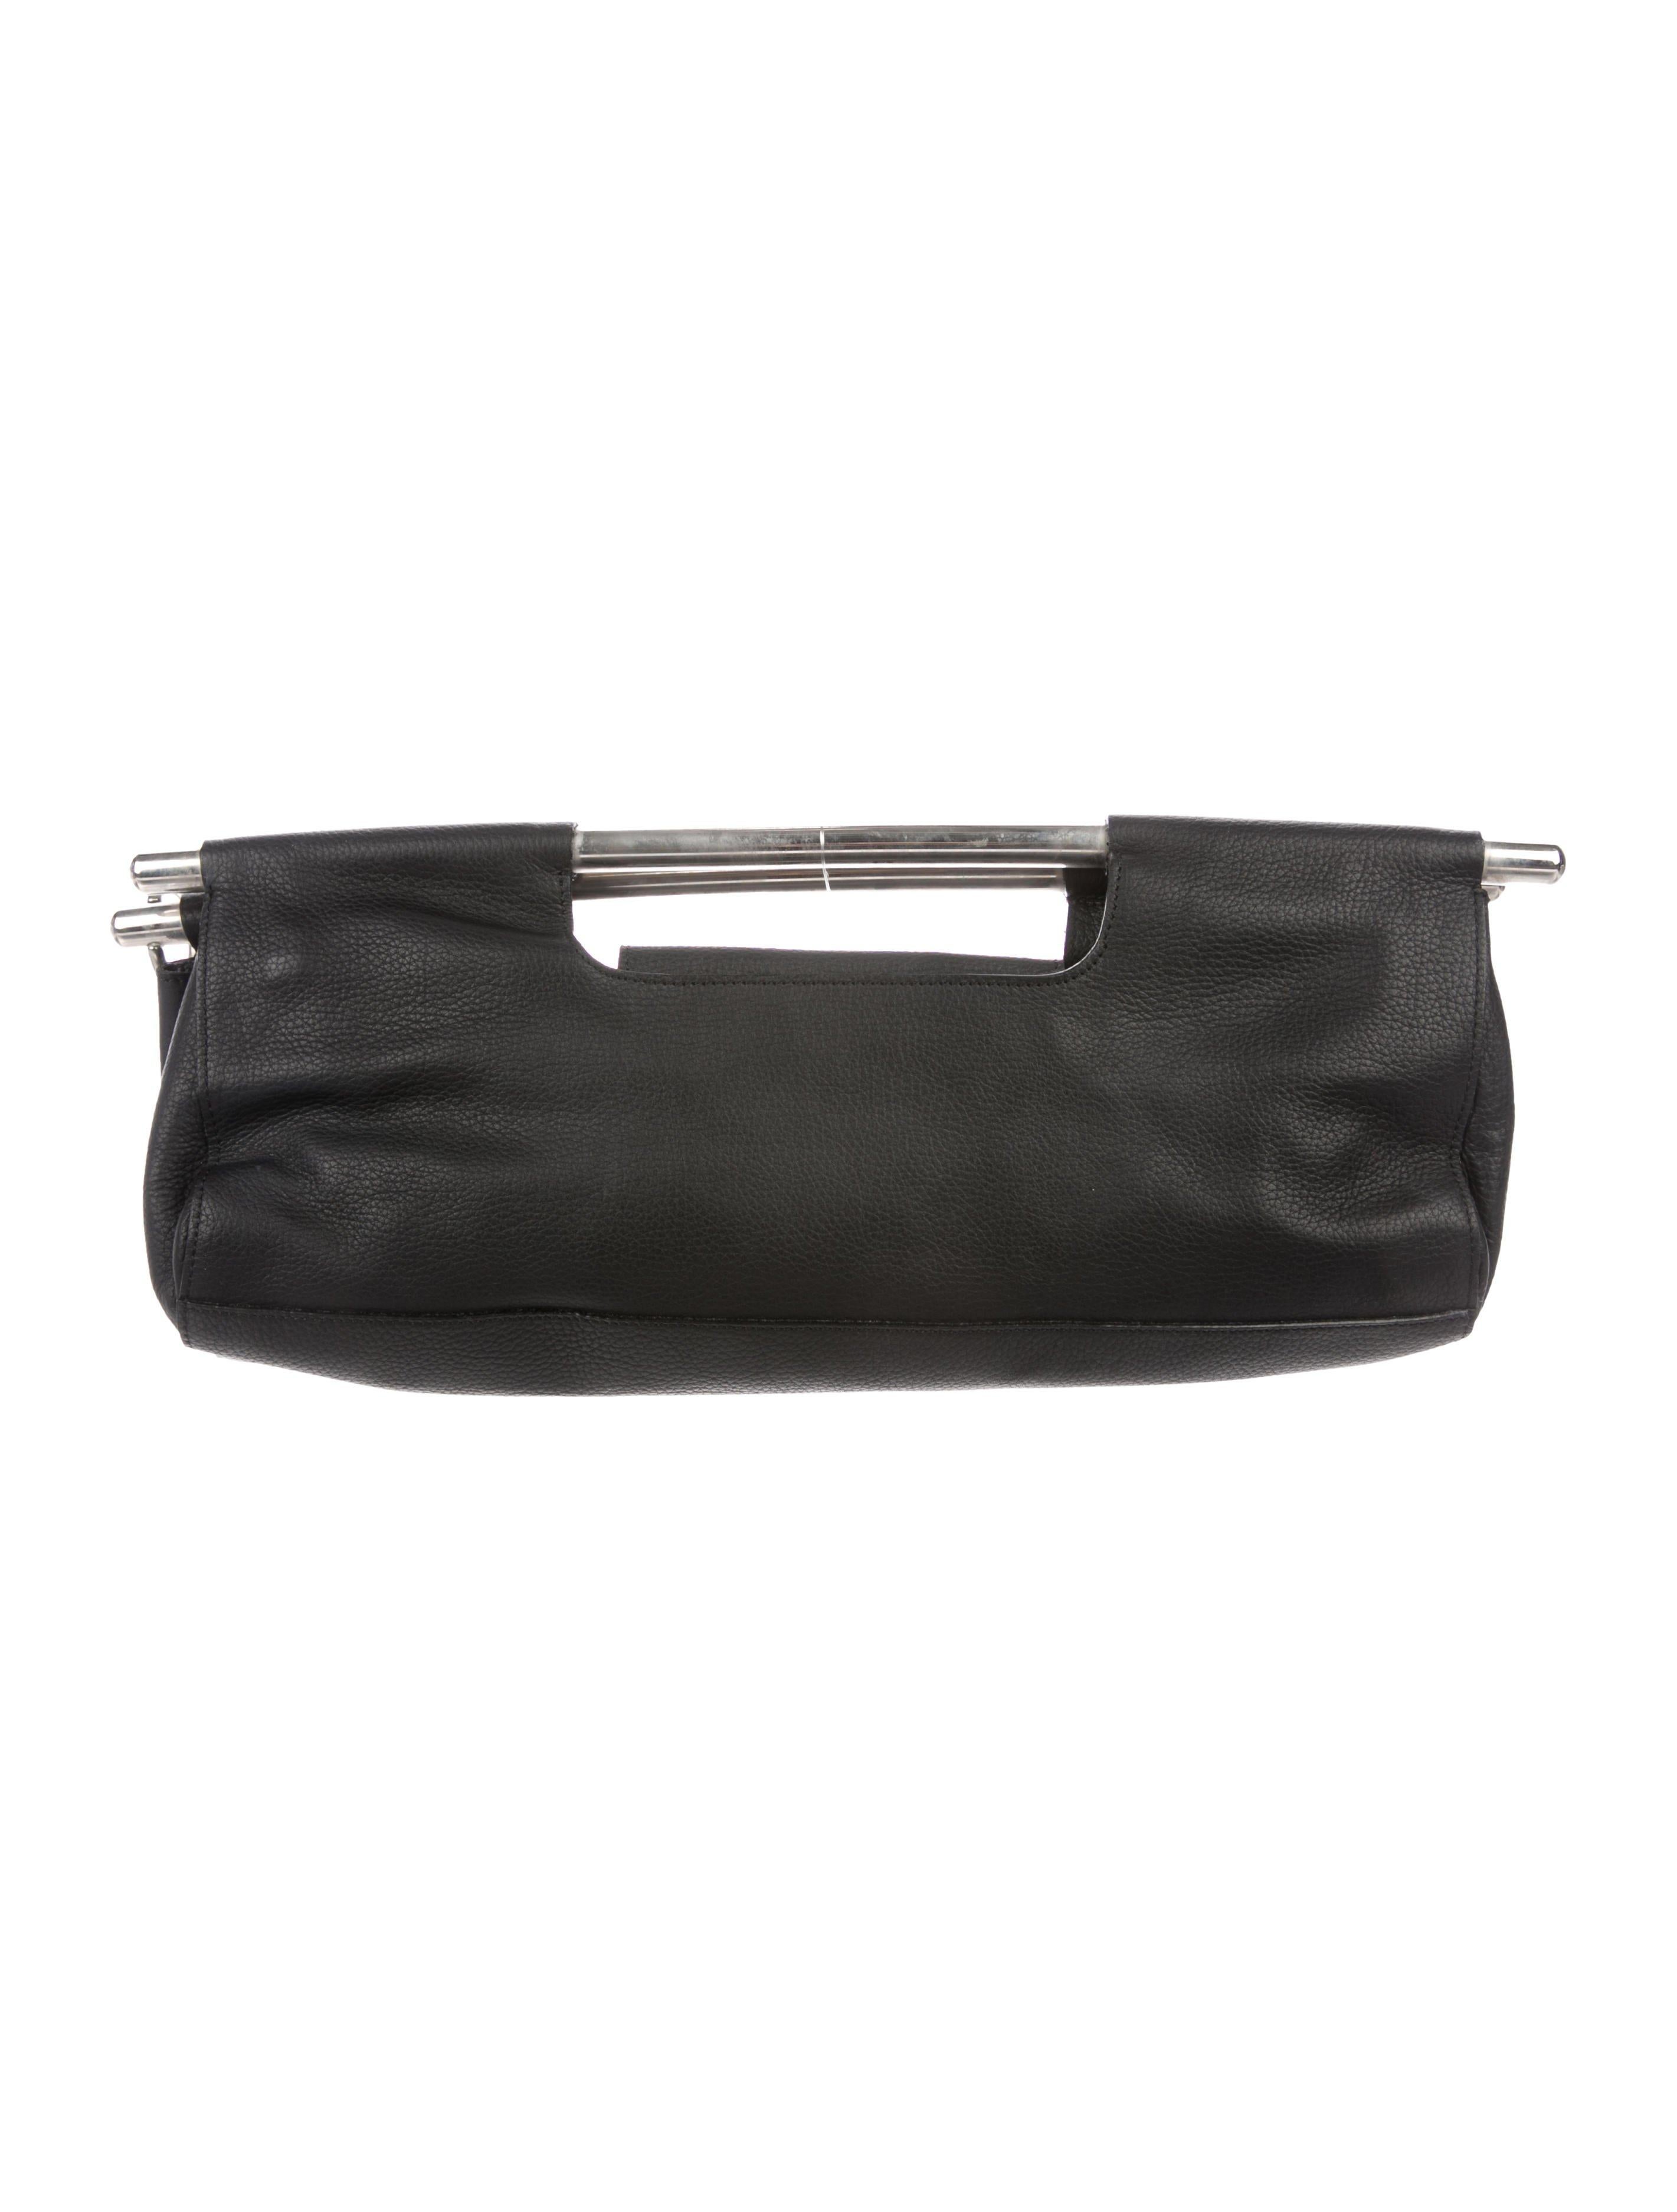 handbags with metal handles